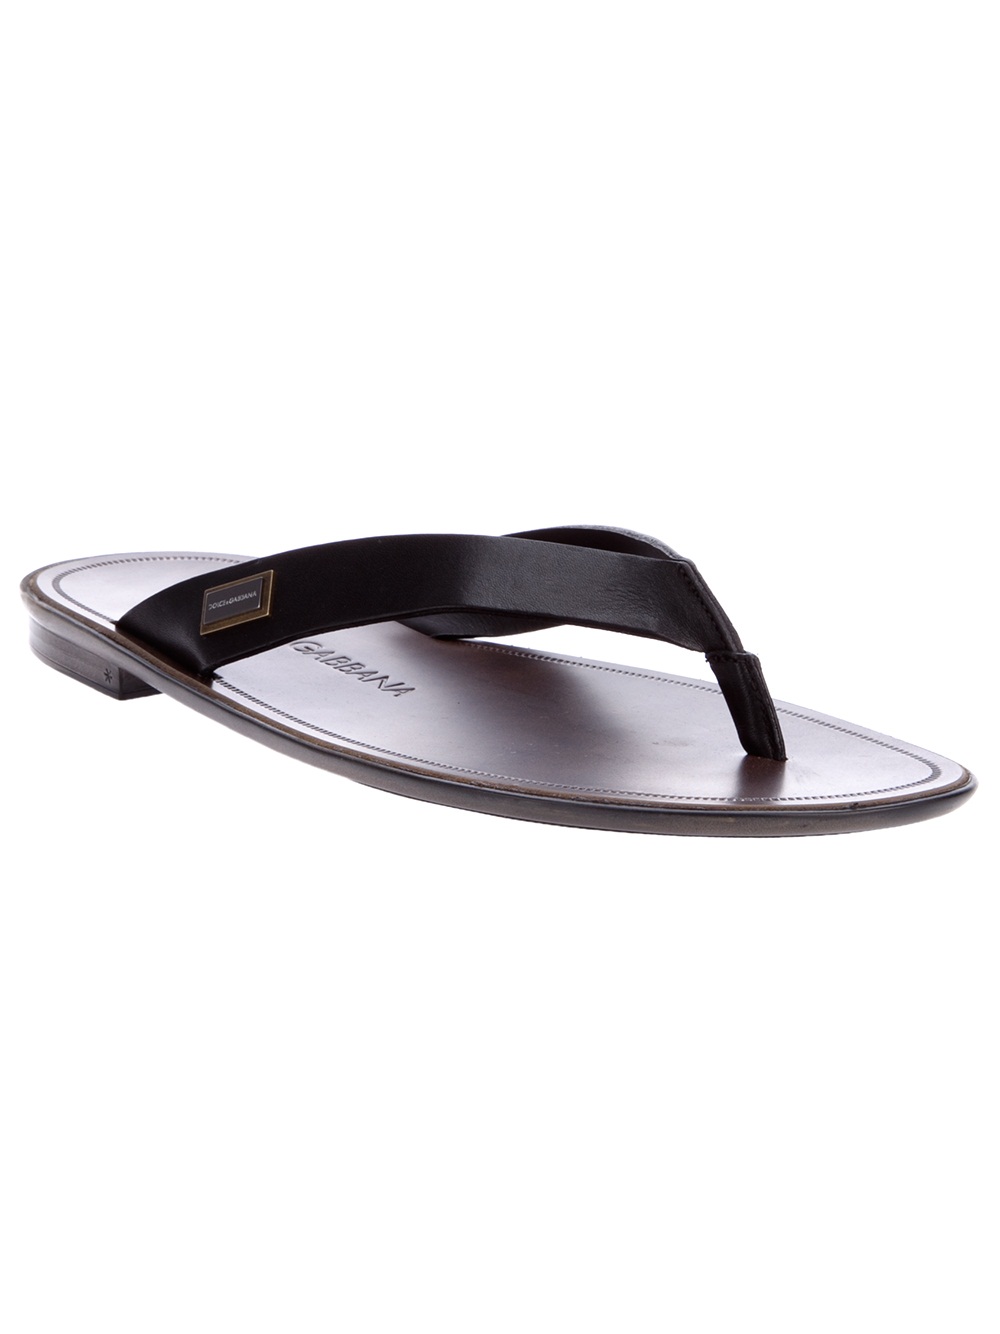 Dolce & Gabbana Leather Thong Sandal in Black for Men | Lyst